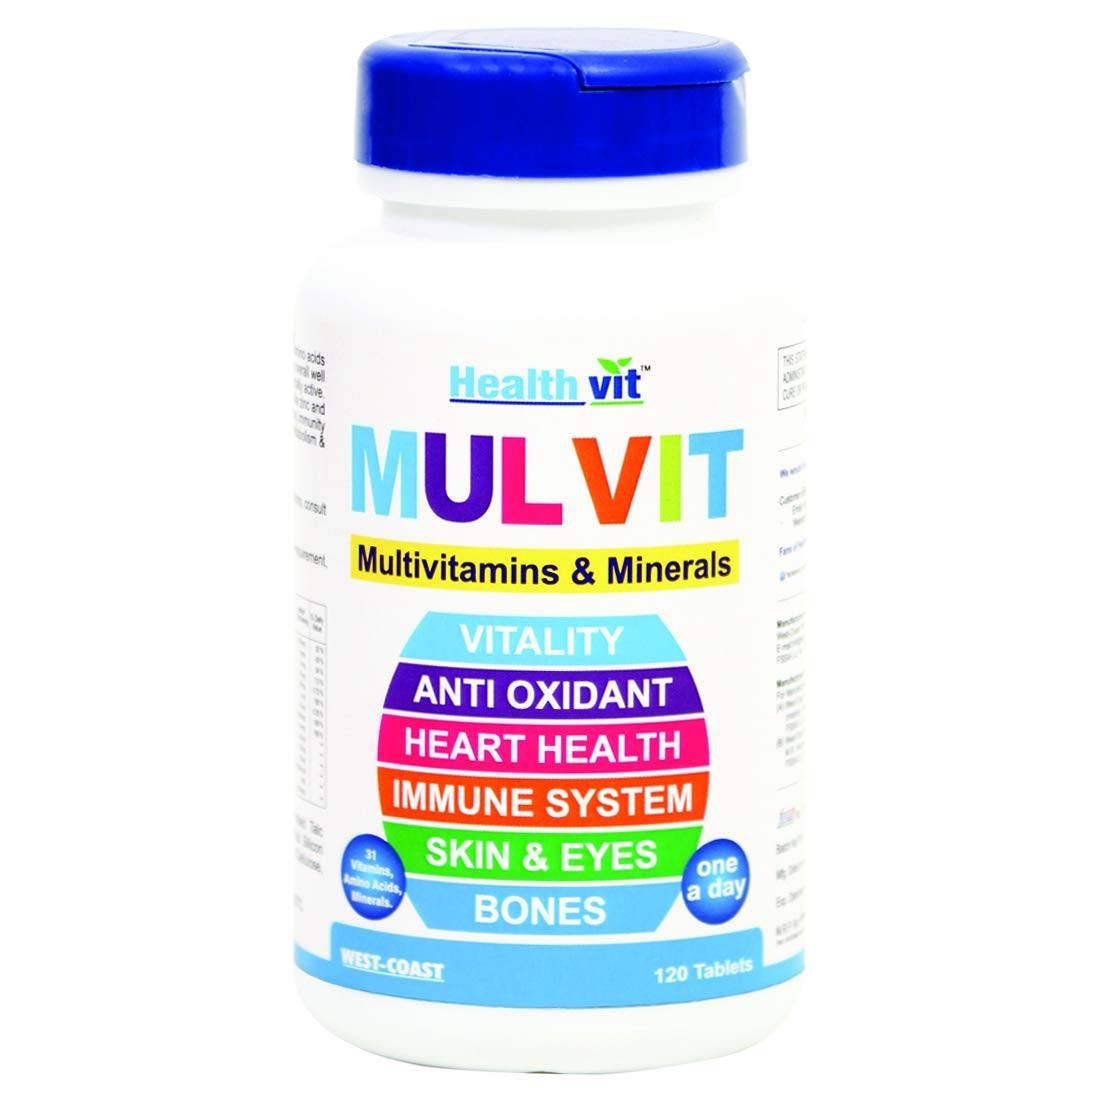 HealthVit Mulvit A To Z Multivitamins & Minerals